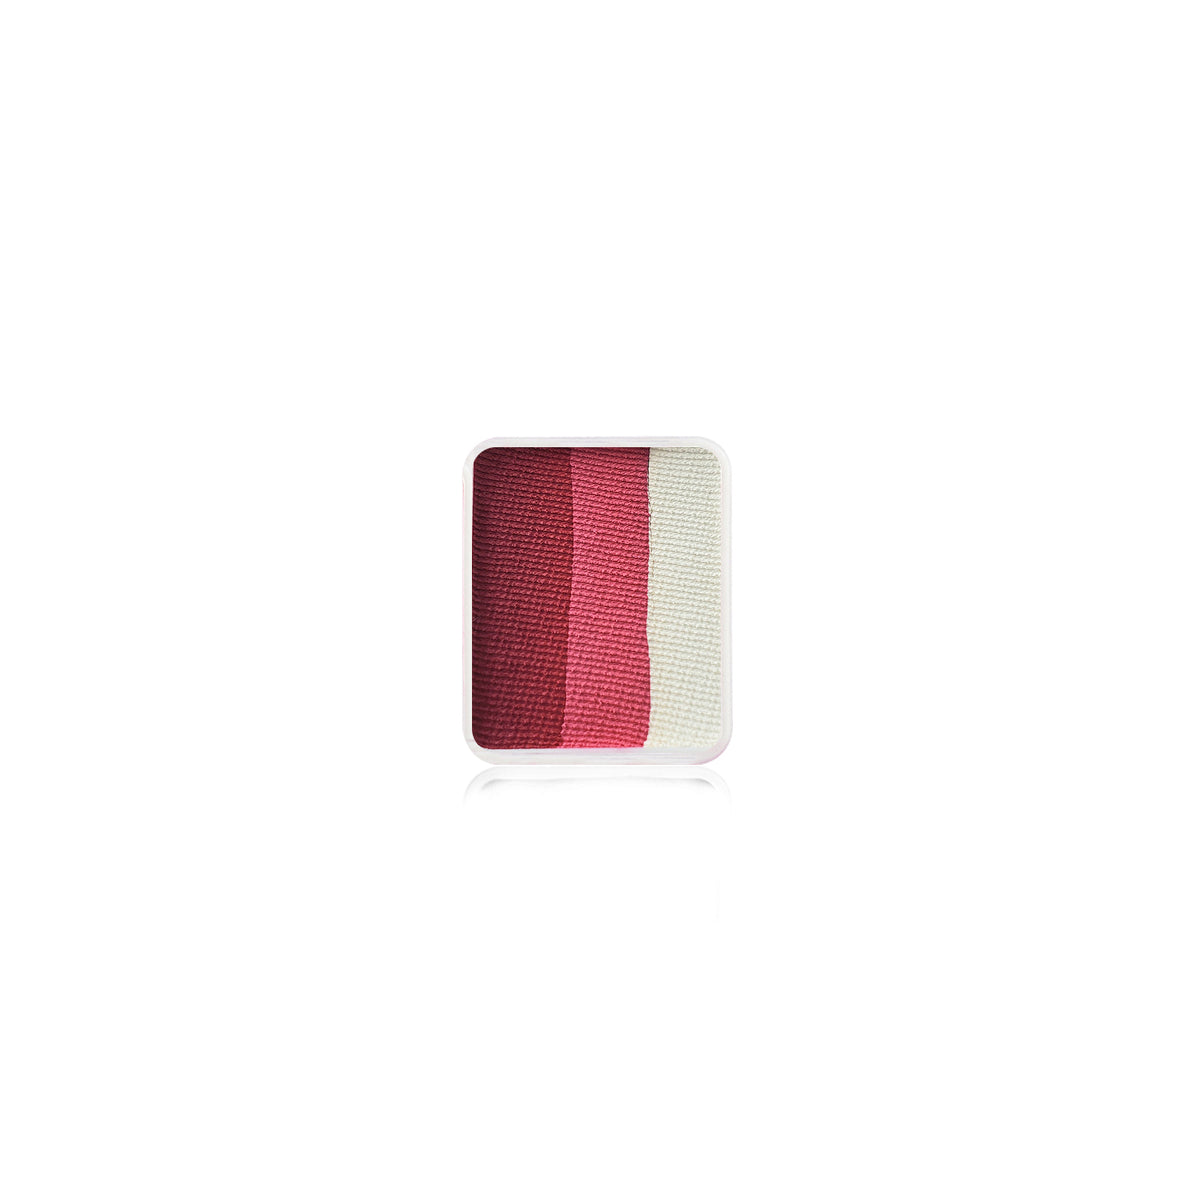 Kraze FX One Stroke Palette Refill - Bloodberry (0.21 oz/6 gm)